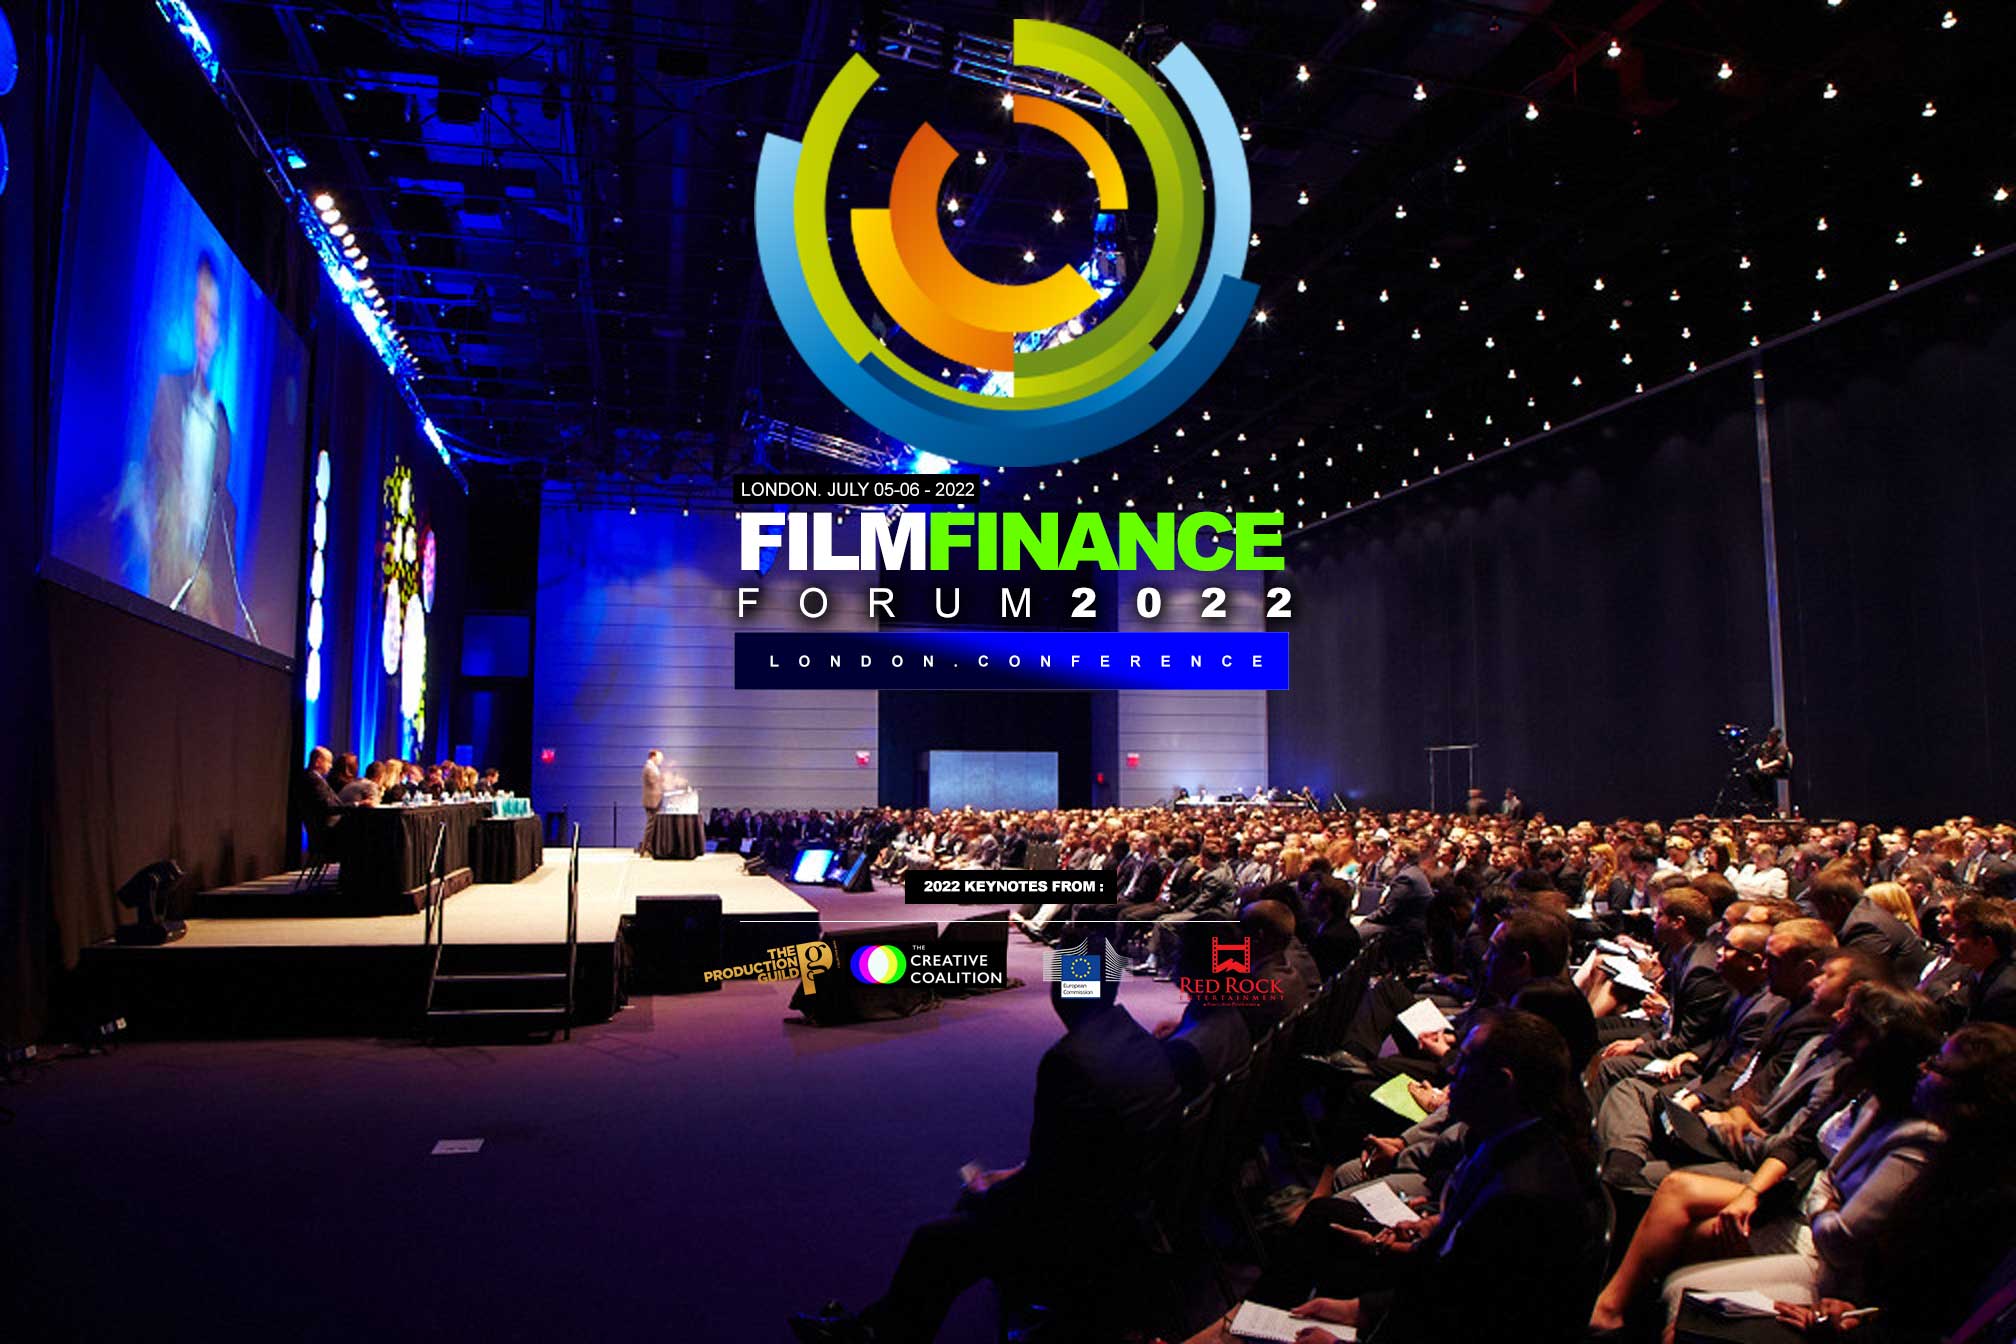 Film Finance Forum - Film Finance Conference 2022 - UK London Europe